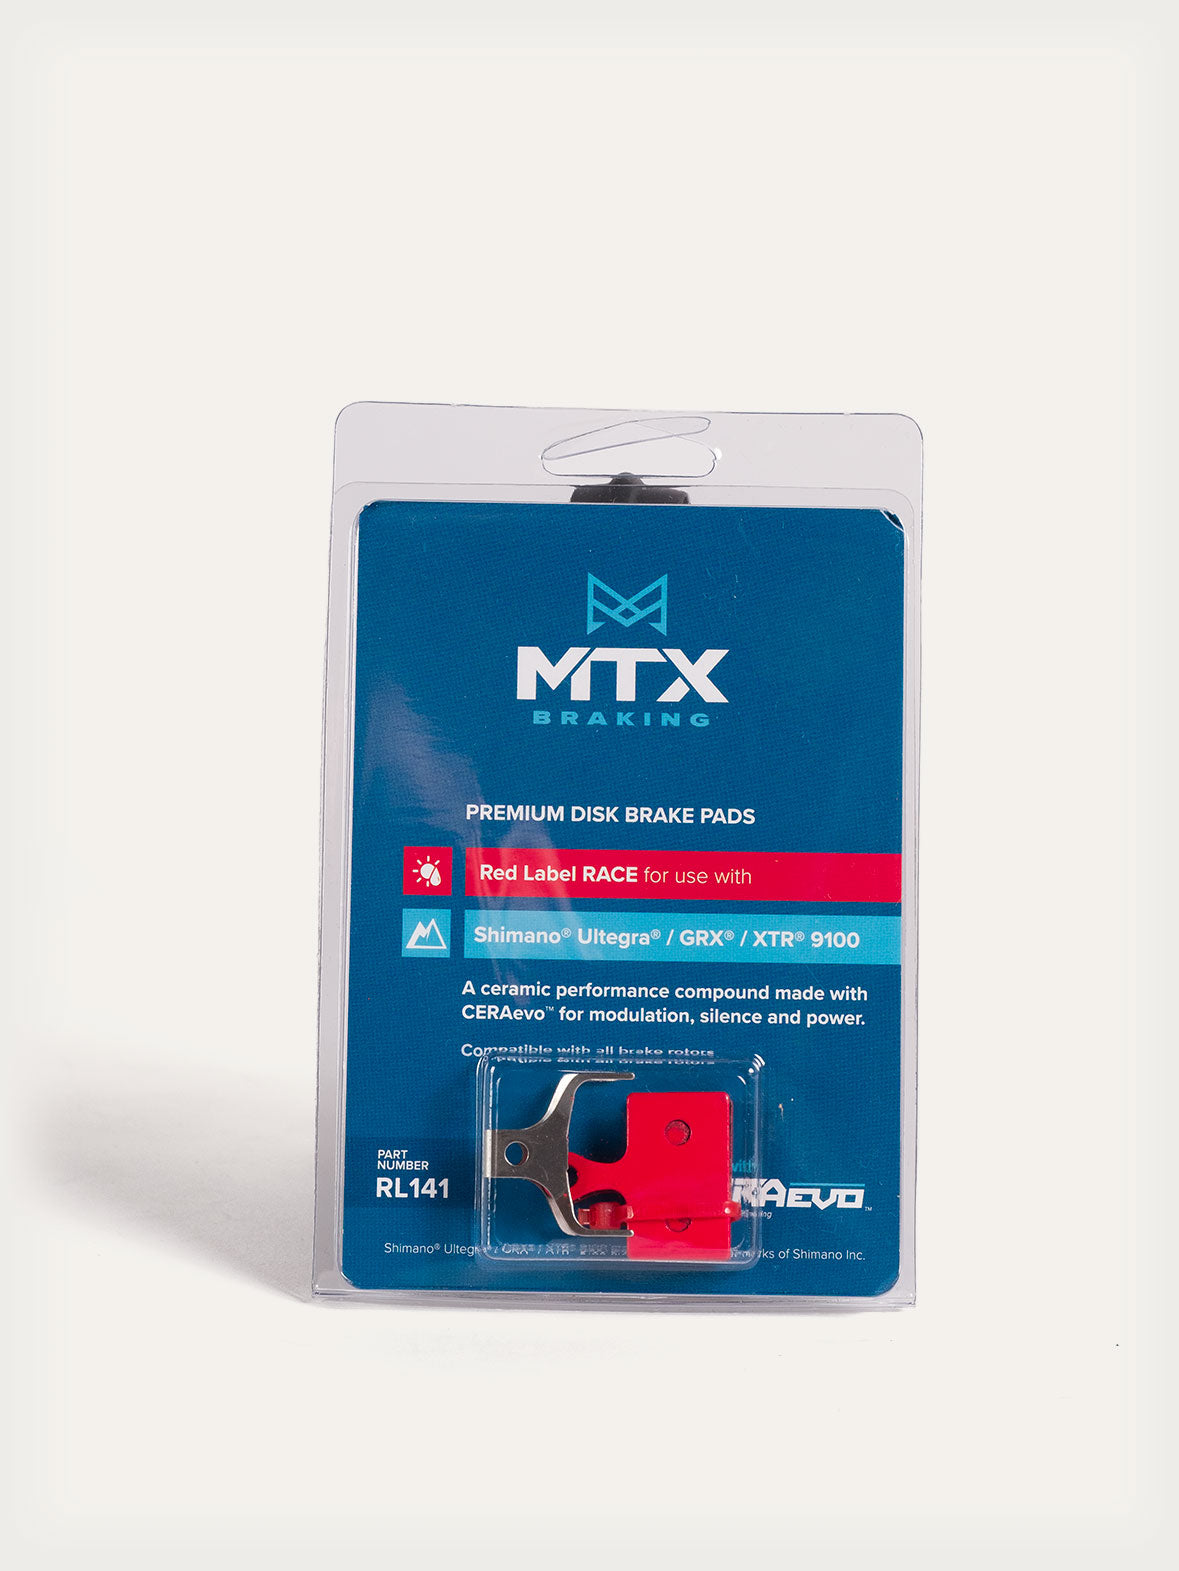 MTX Premium Disk Brake Pads | Reliable Braking